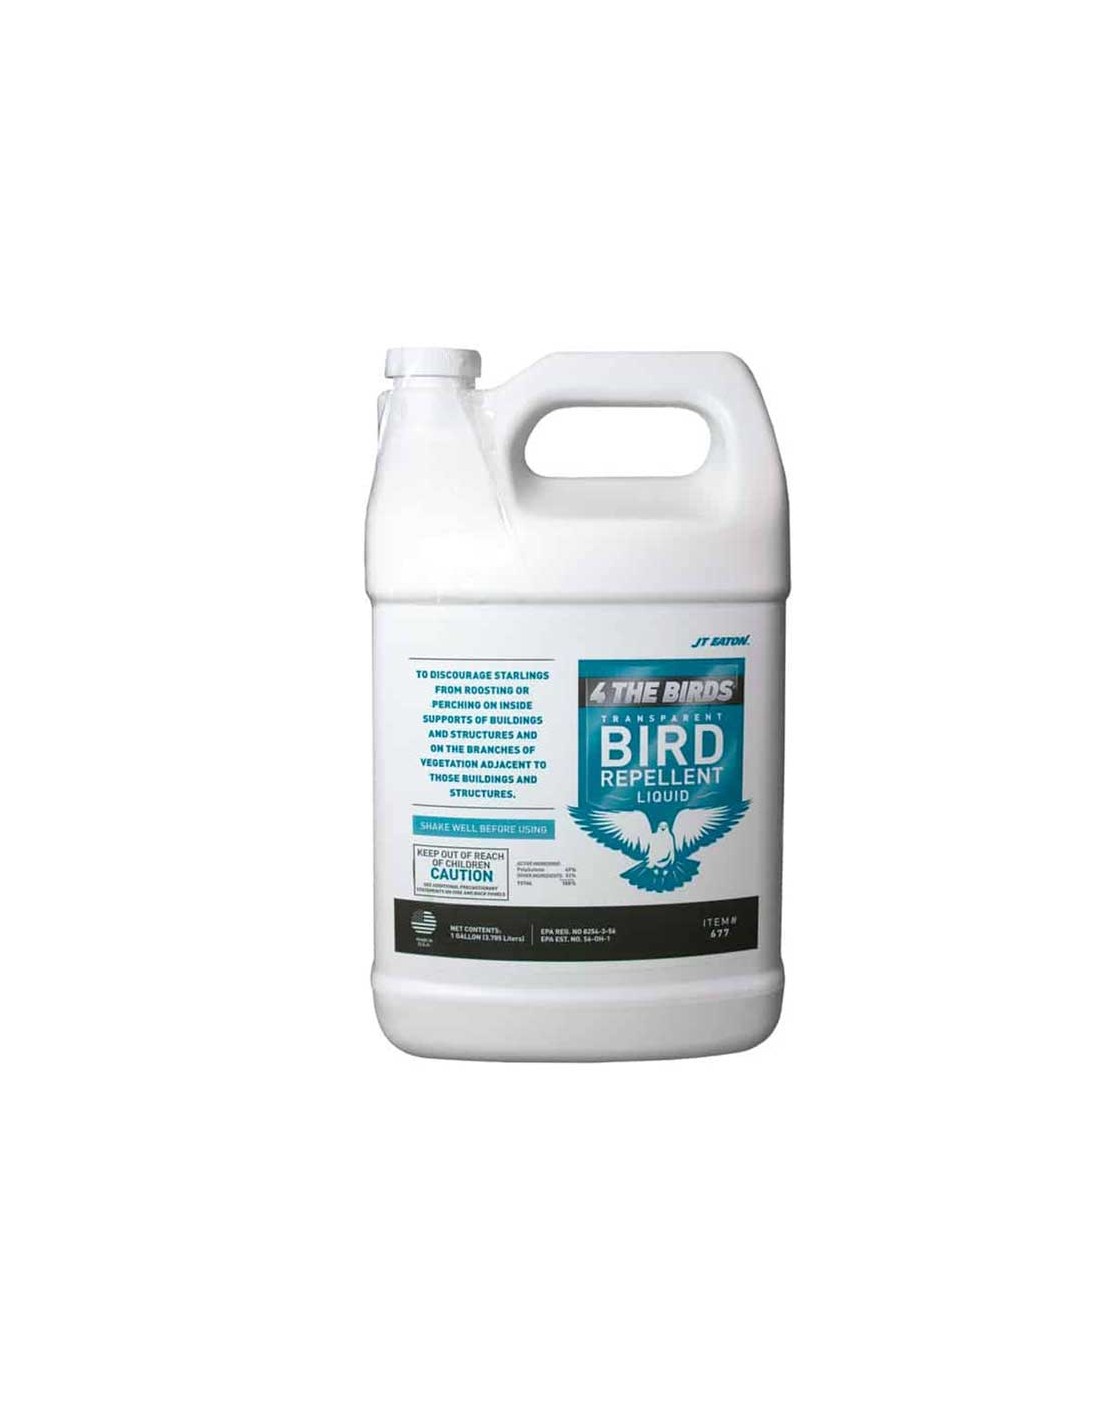 Eaton's 4 The Birds Bird Repellent Liquid Questions & Answers